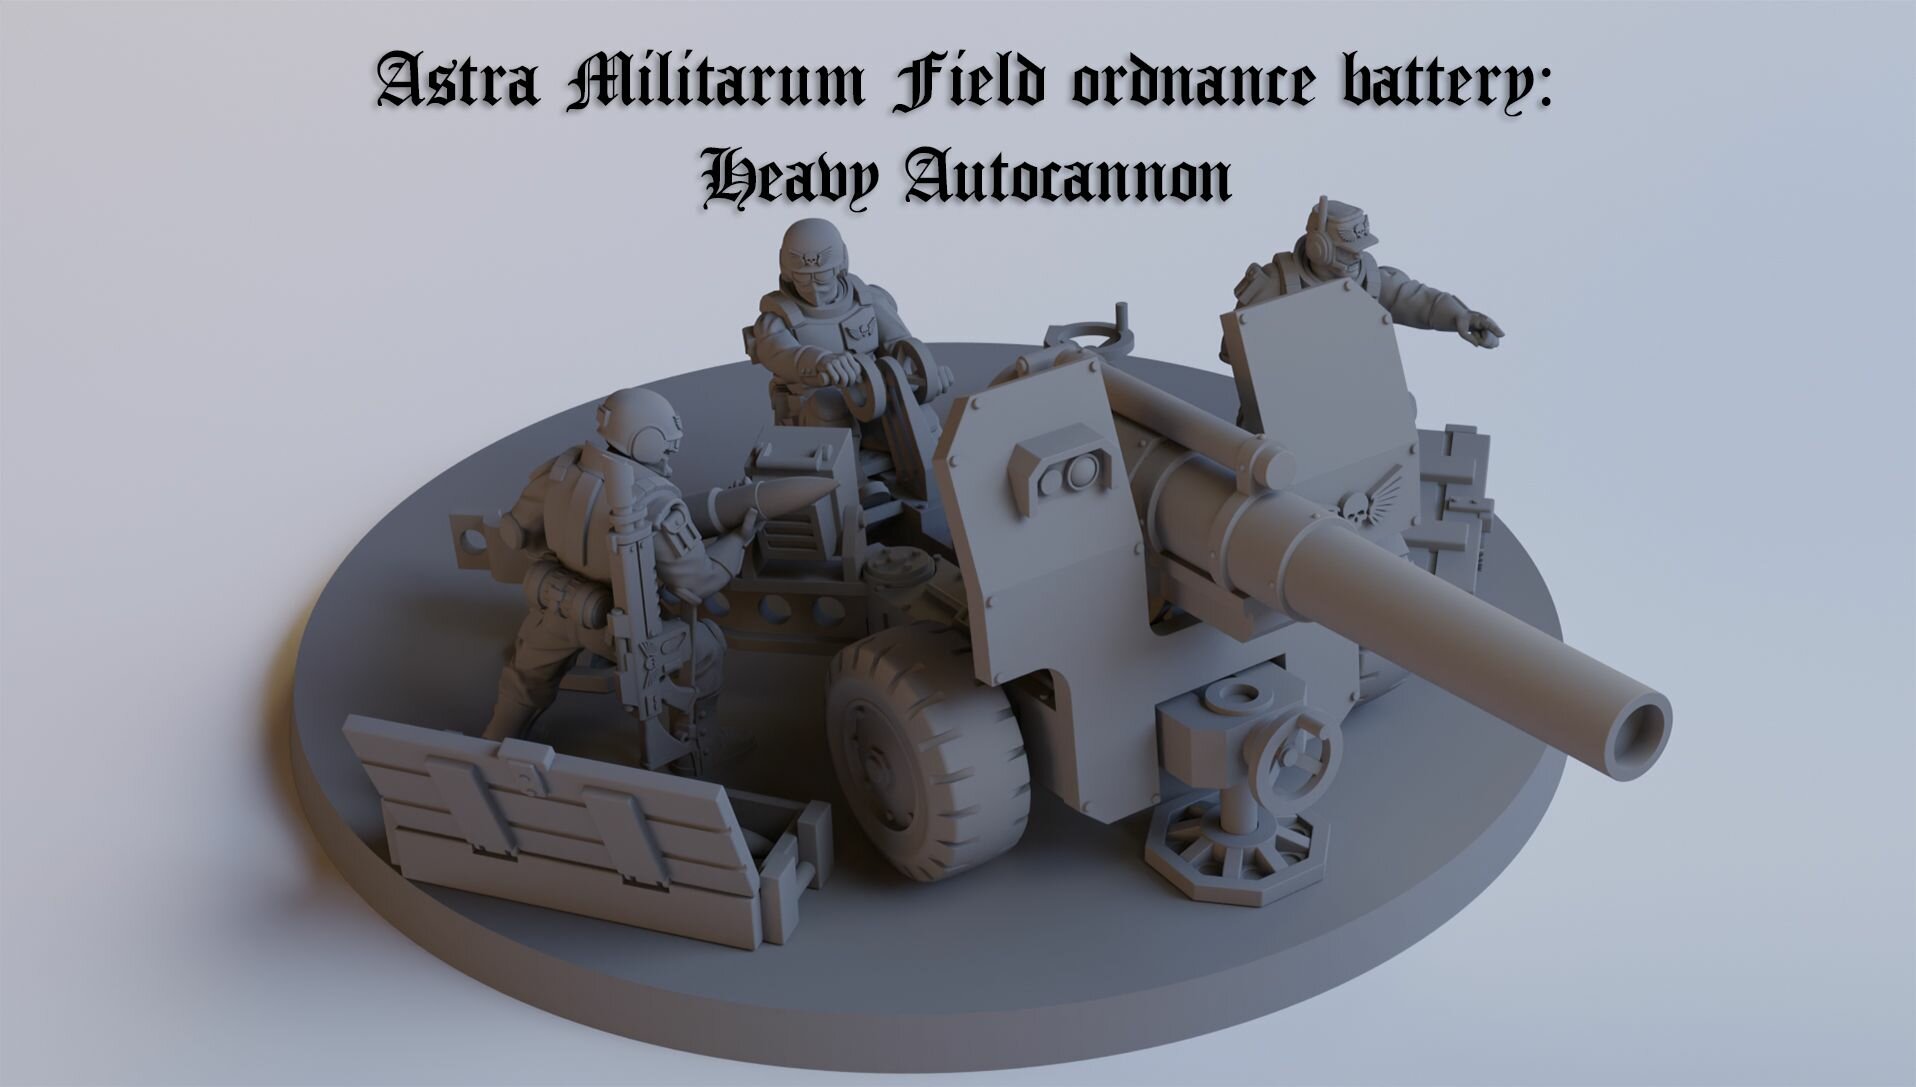 Astra Militarum Field ordnance battery: Heavy Autocannon / Артиллерийский рассчёт с тяжёлой автопушкой / Warhammer 40k Астра Милитарум